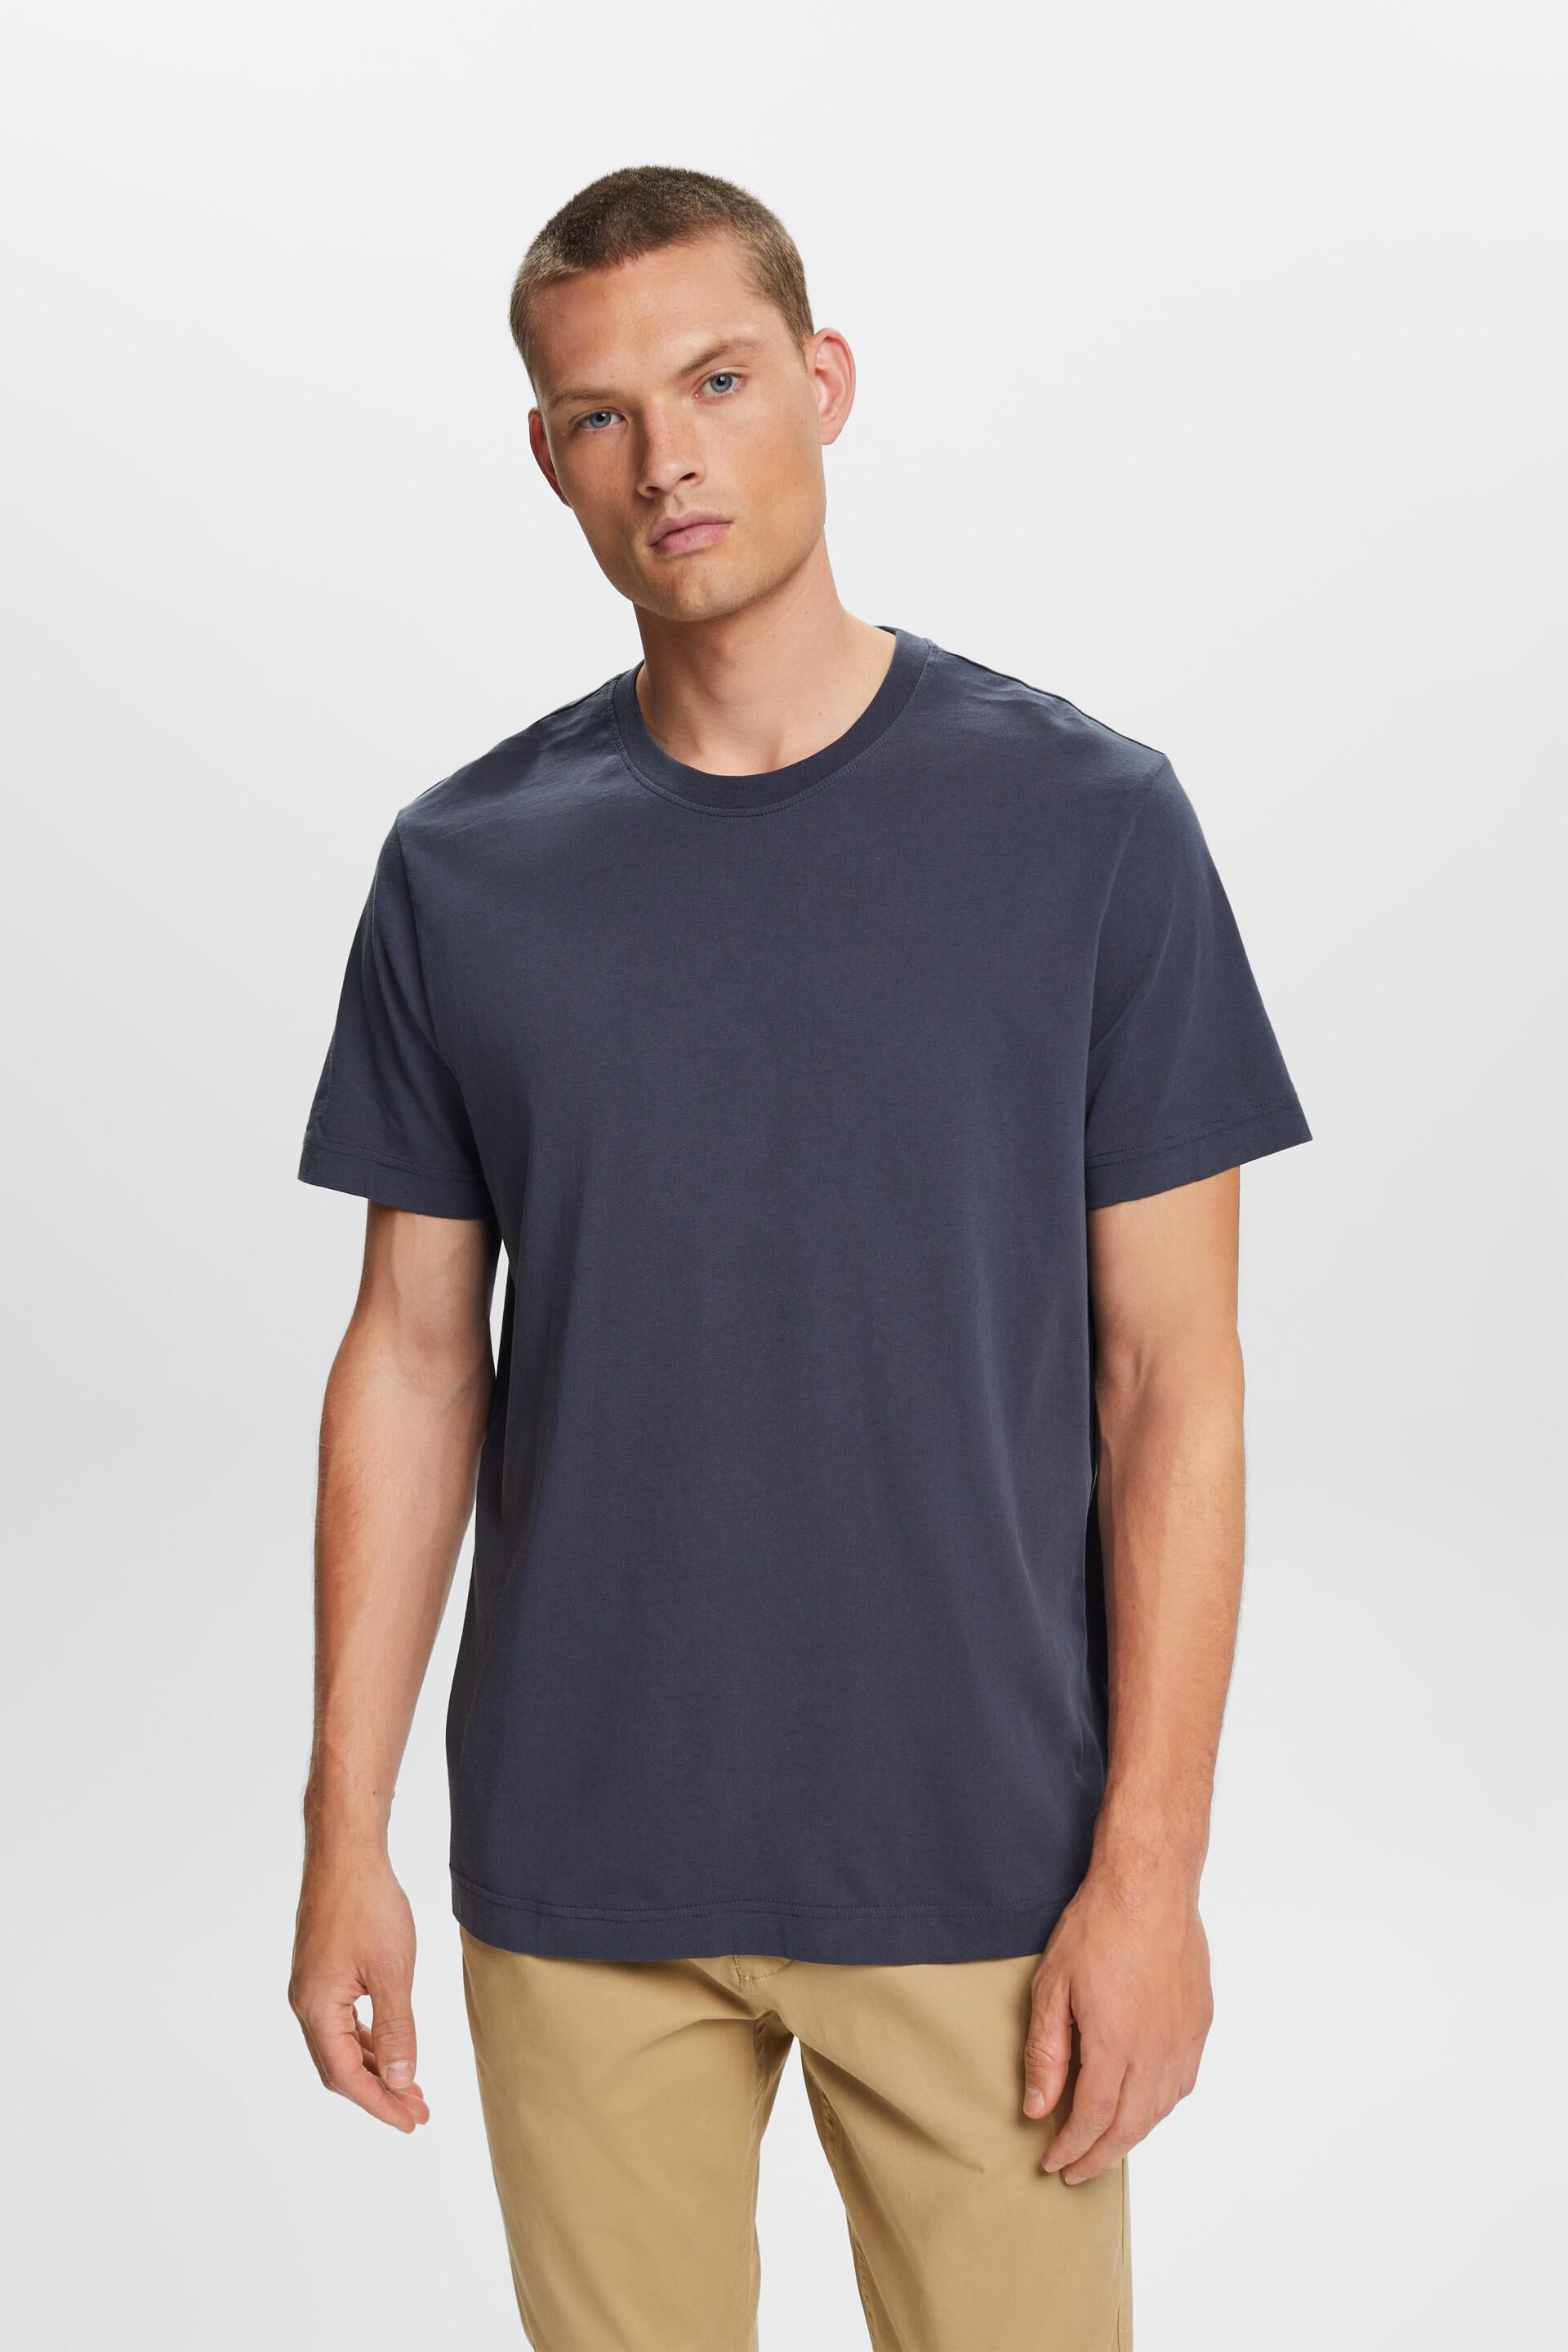 Esprit cotton crewneck Jersey 100% t-shirt,